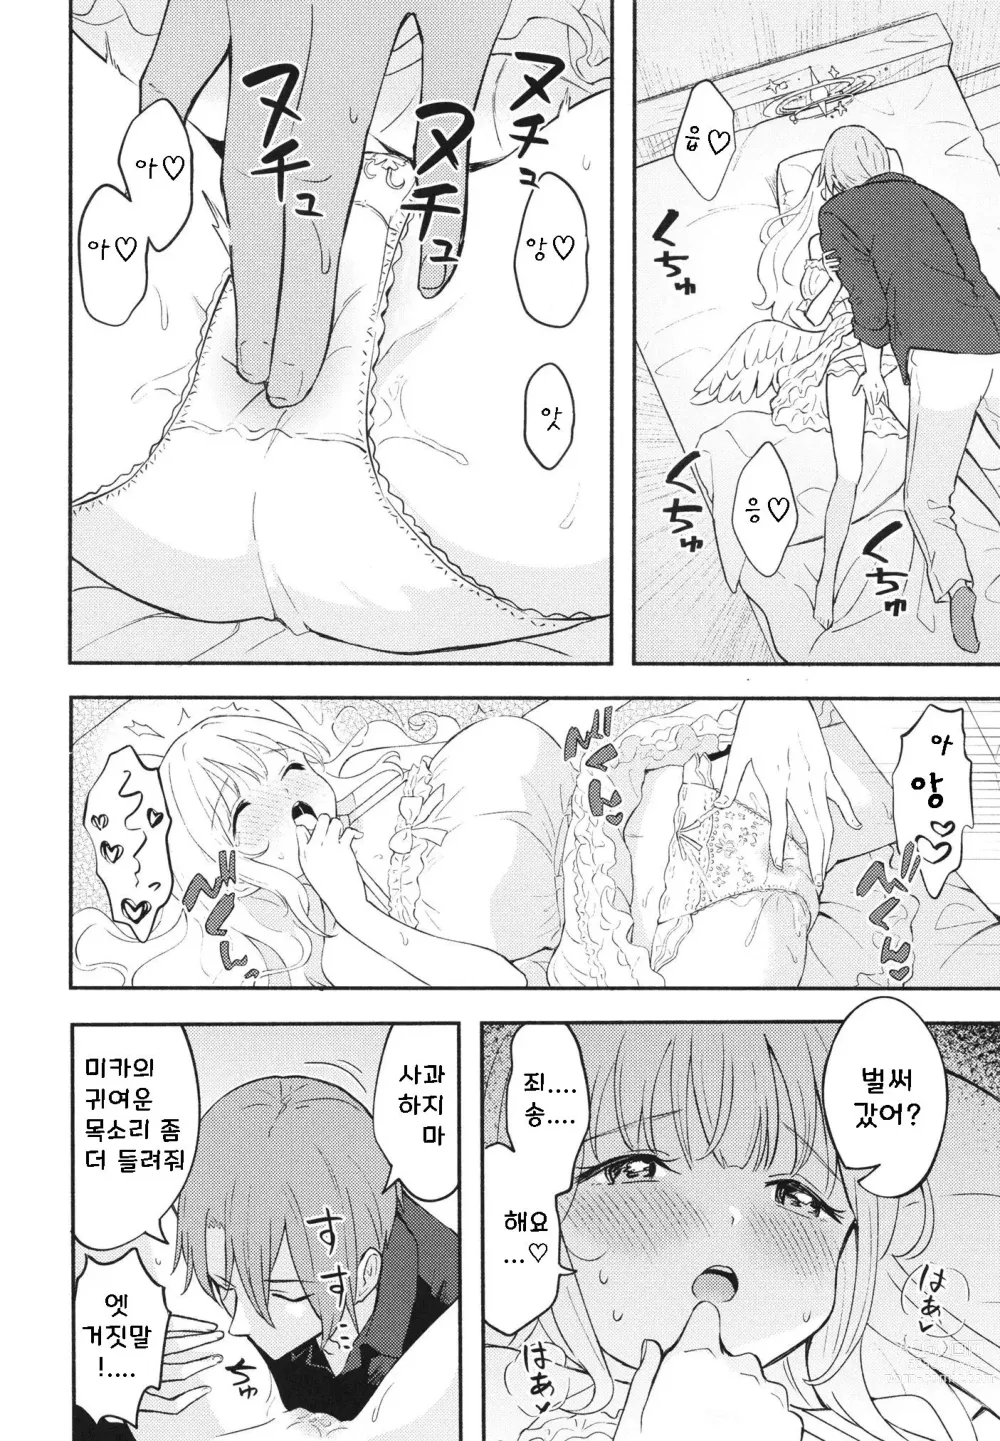 Page 11 of doujinshi 미소노 미카는 선생님에게 너무 사랑 받는다